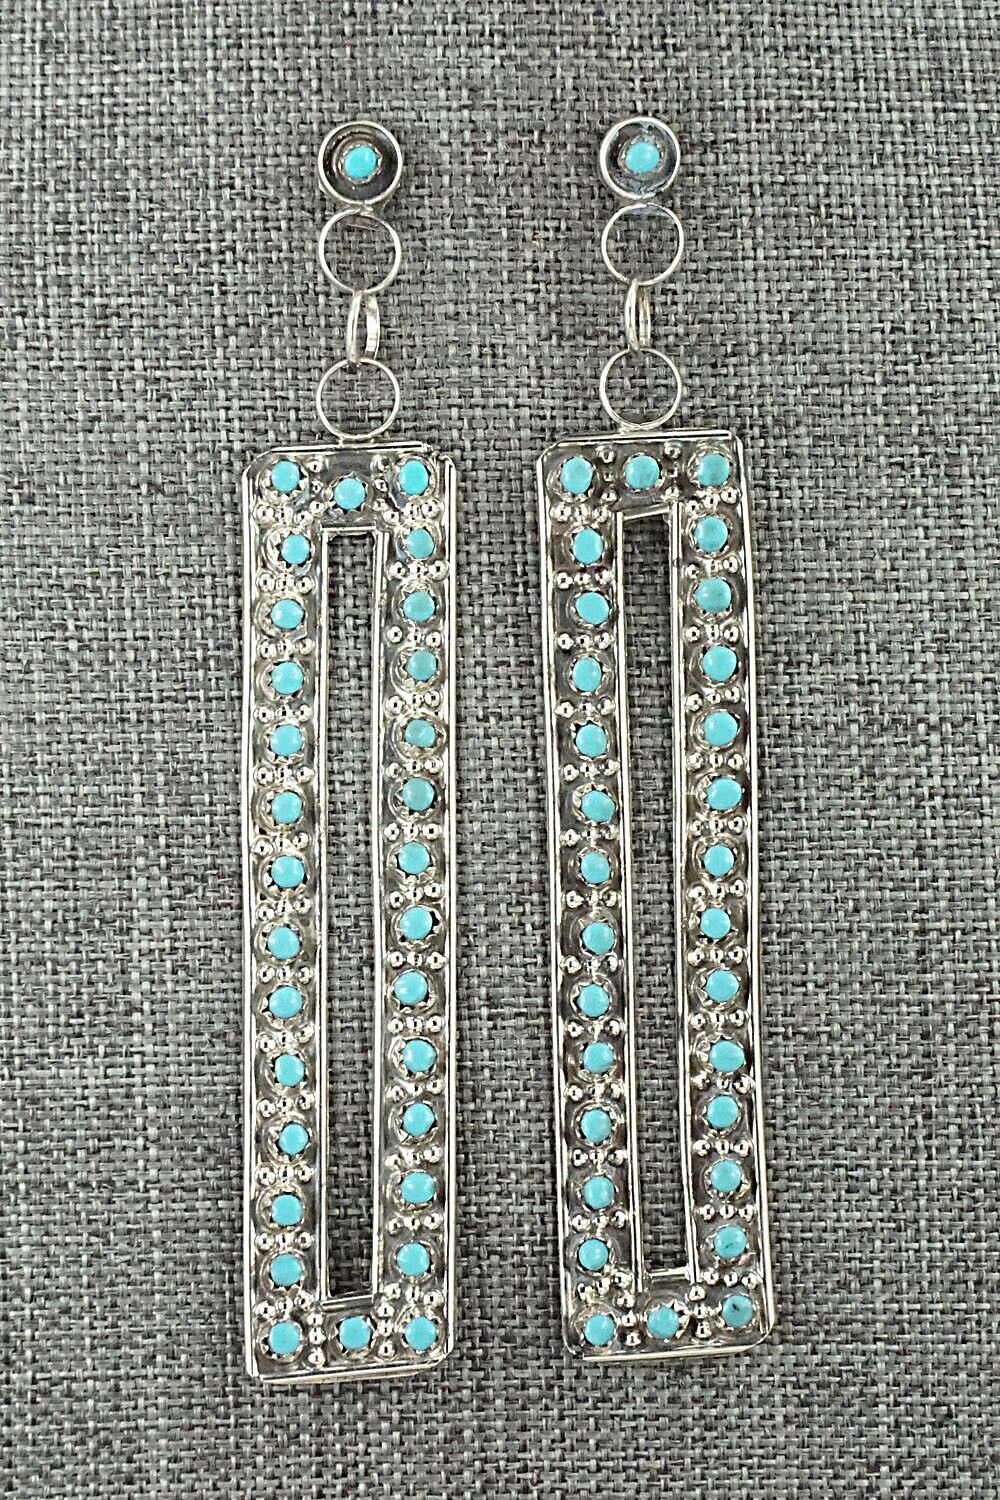 Turquoise & Sterling Silver Earrings - Joanne Cheama